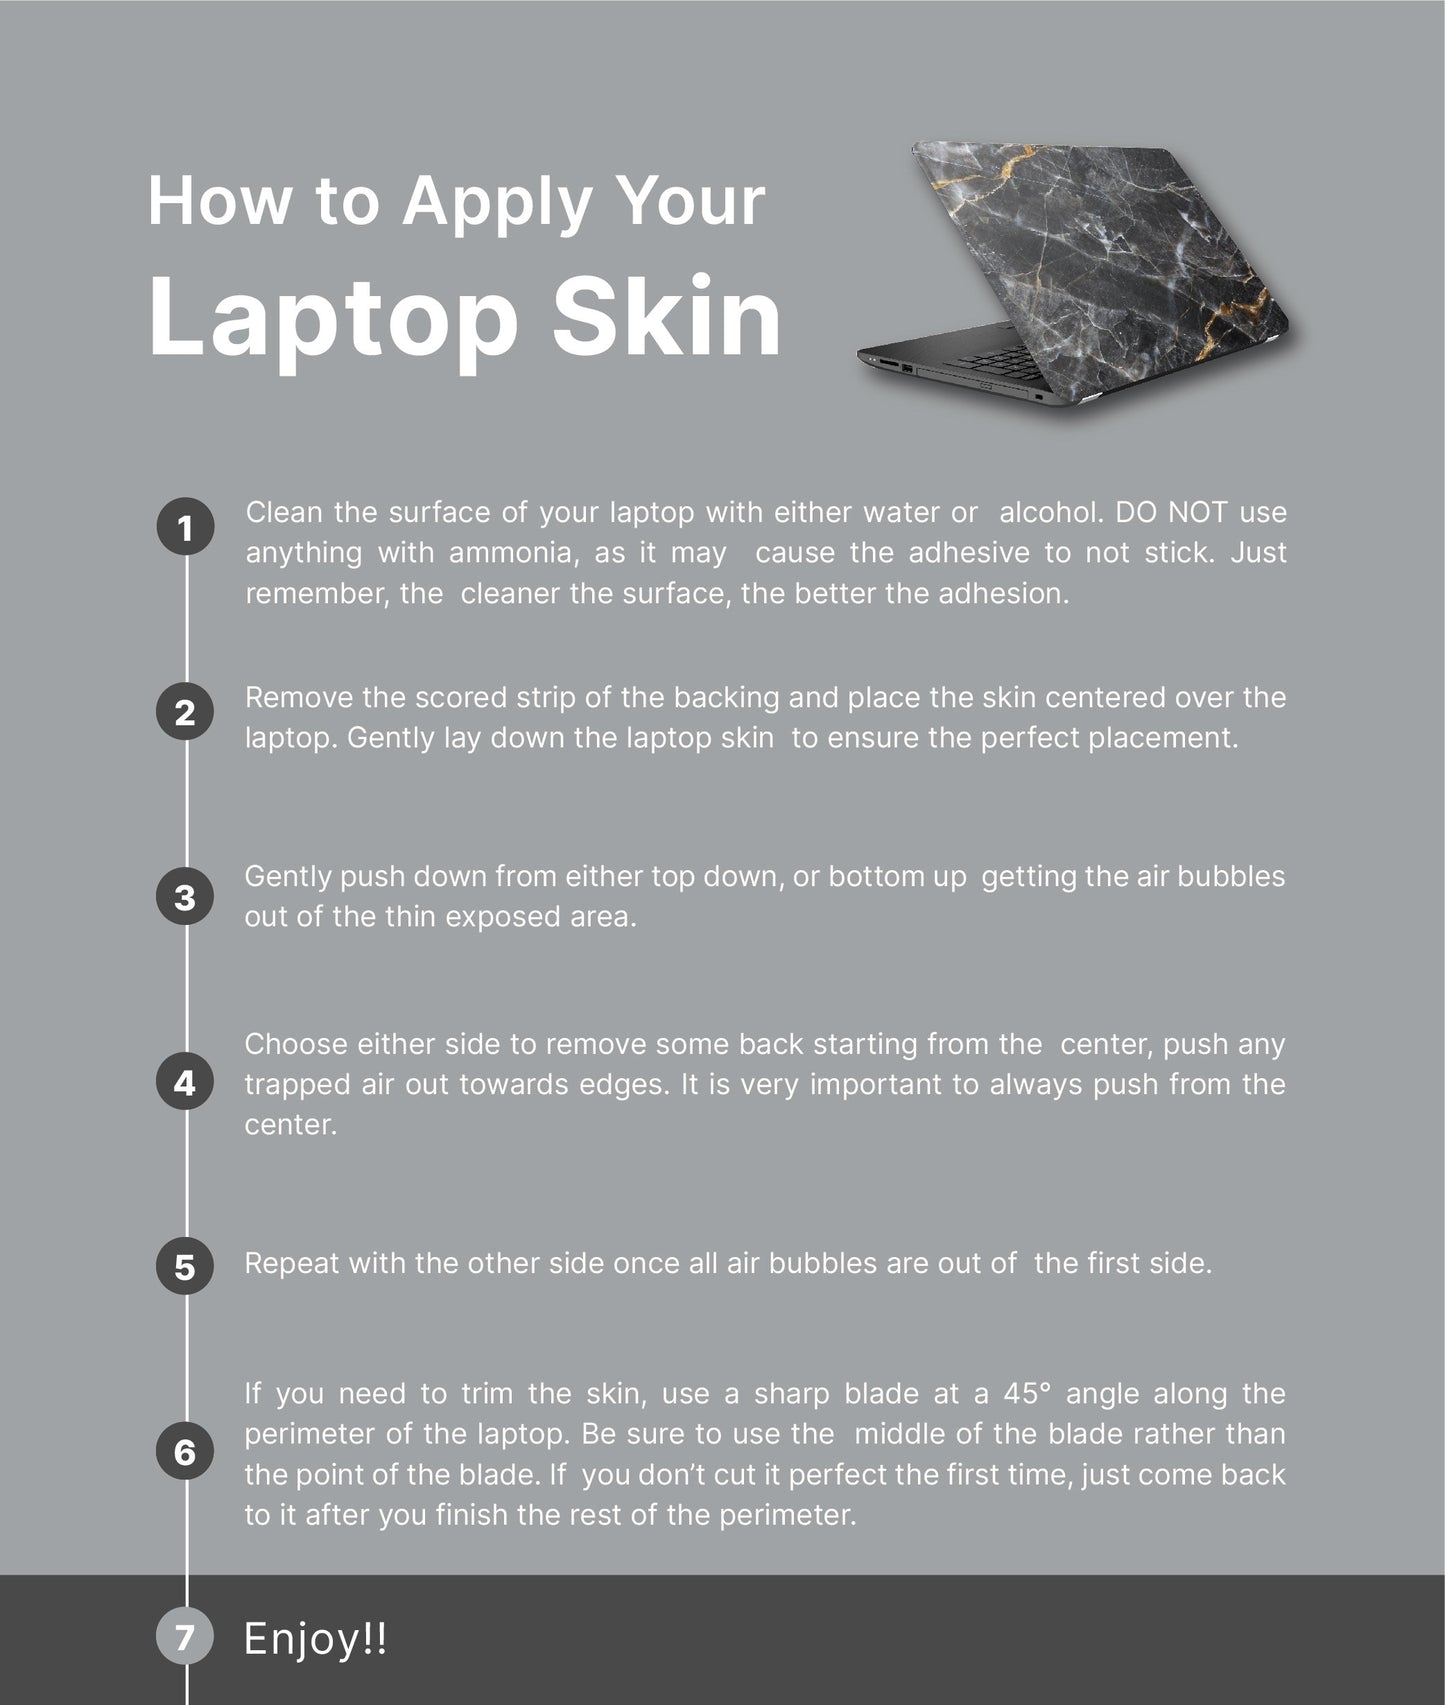 Tropical Floral Laptop Skin, Laptop Cover, Laptop Skins, Removable Laptop Skins, Laptop Decal, Customized Laptop Skin, Laptop Stickers 151